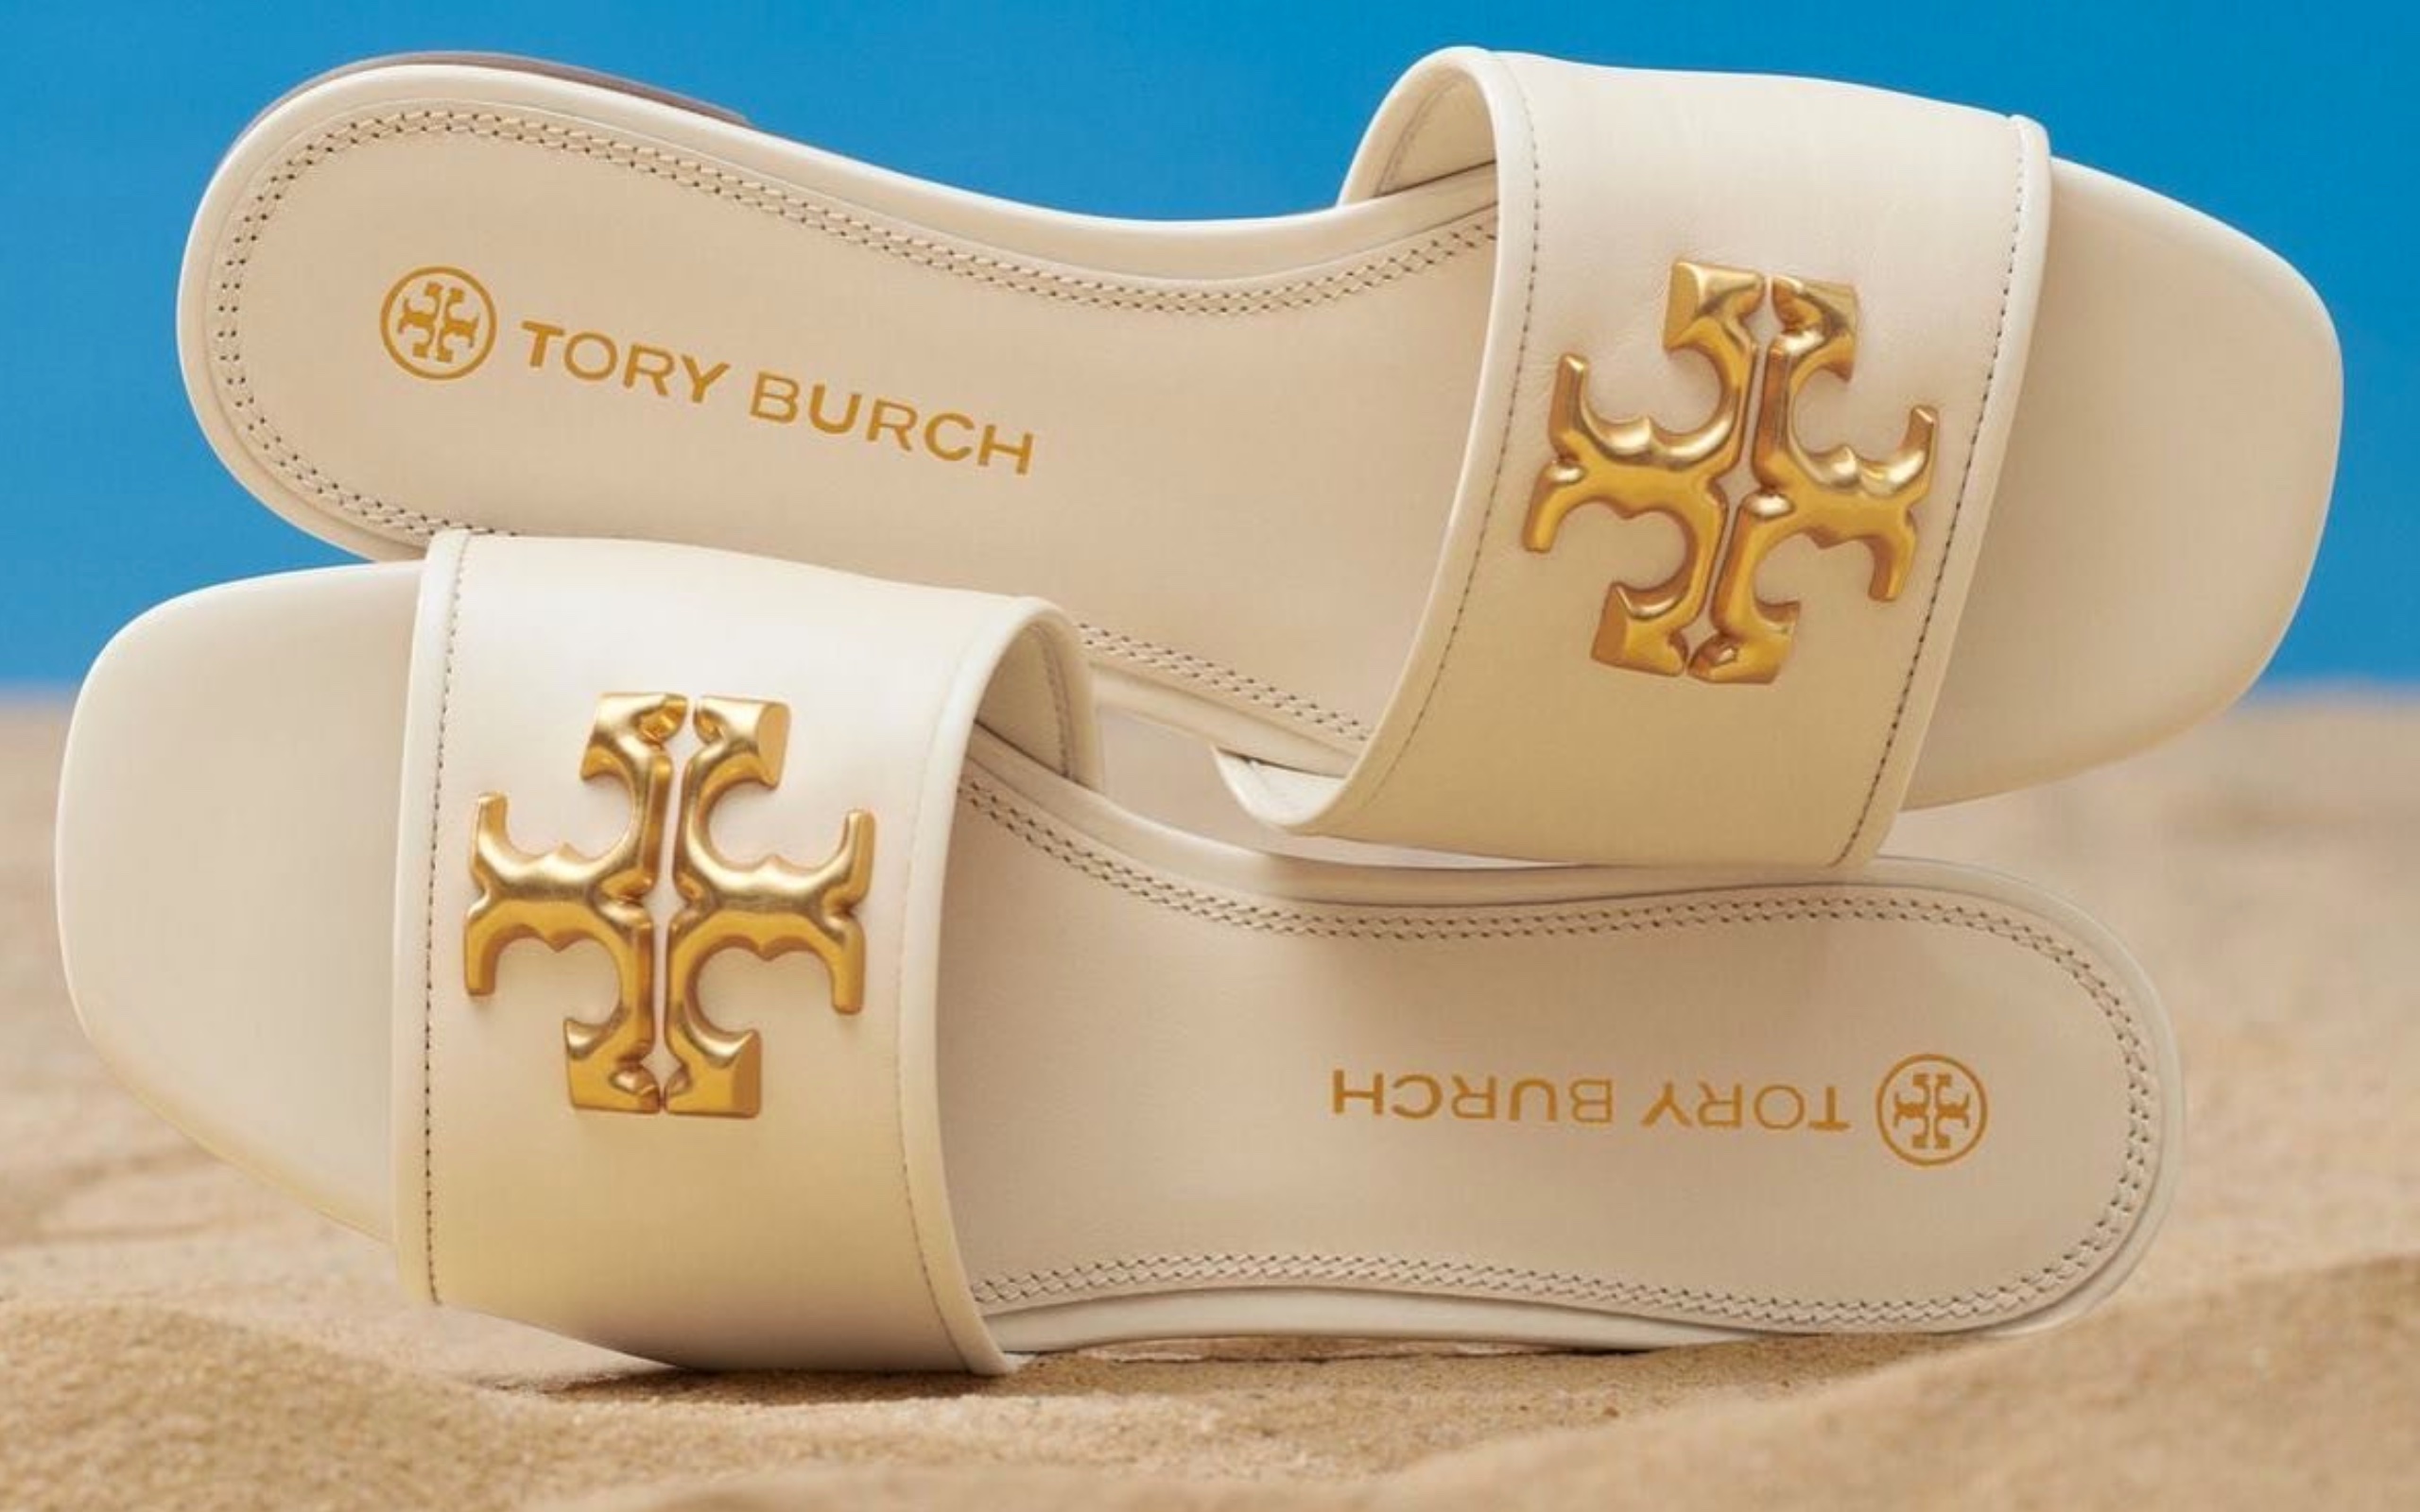 Tory Burch Semi-Annual sale: Shop Tory Burch sandals, purses and more